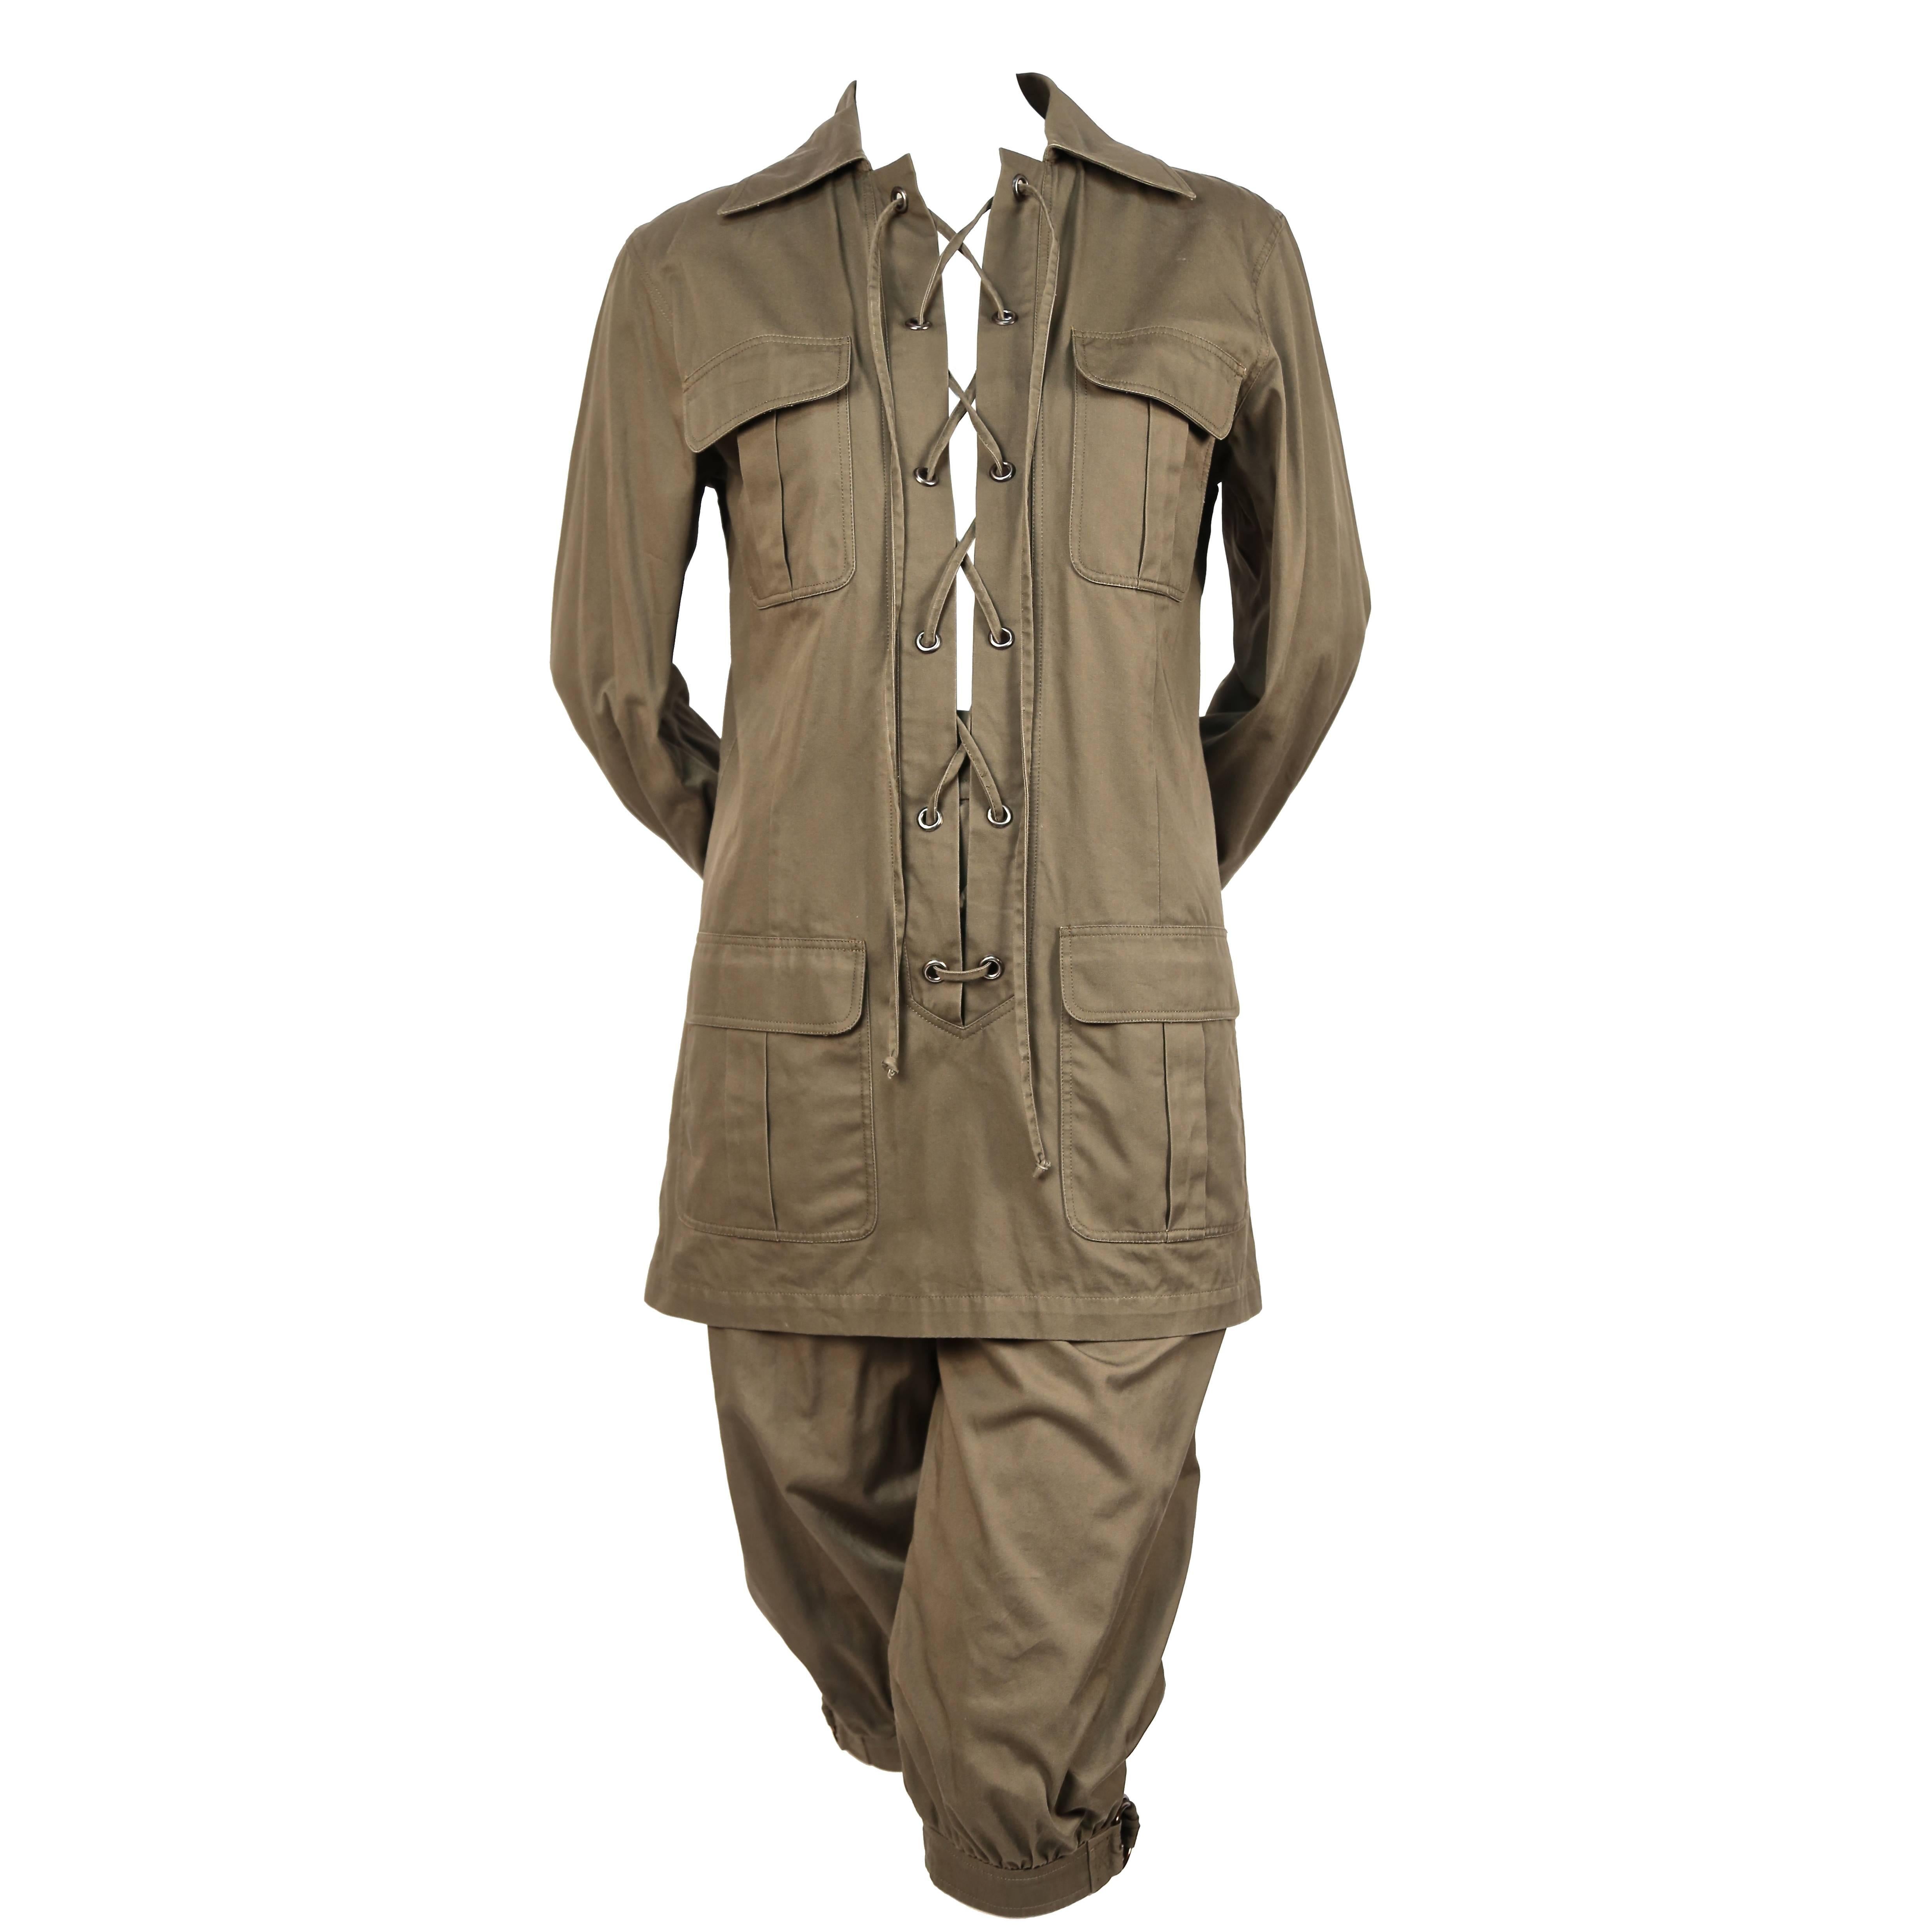 Iconic YVES SAINT LAURENT "Saharienne" khaki tunic safari suit